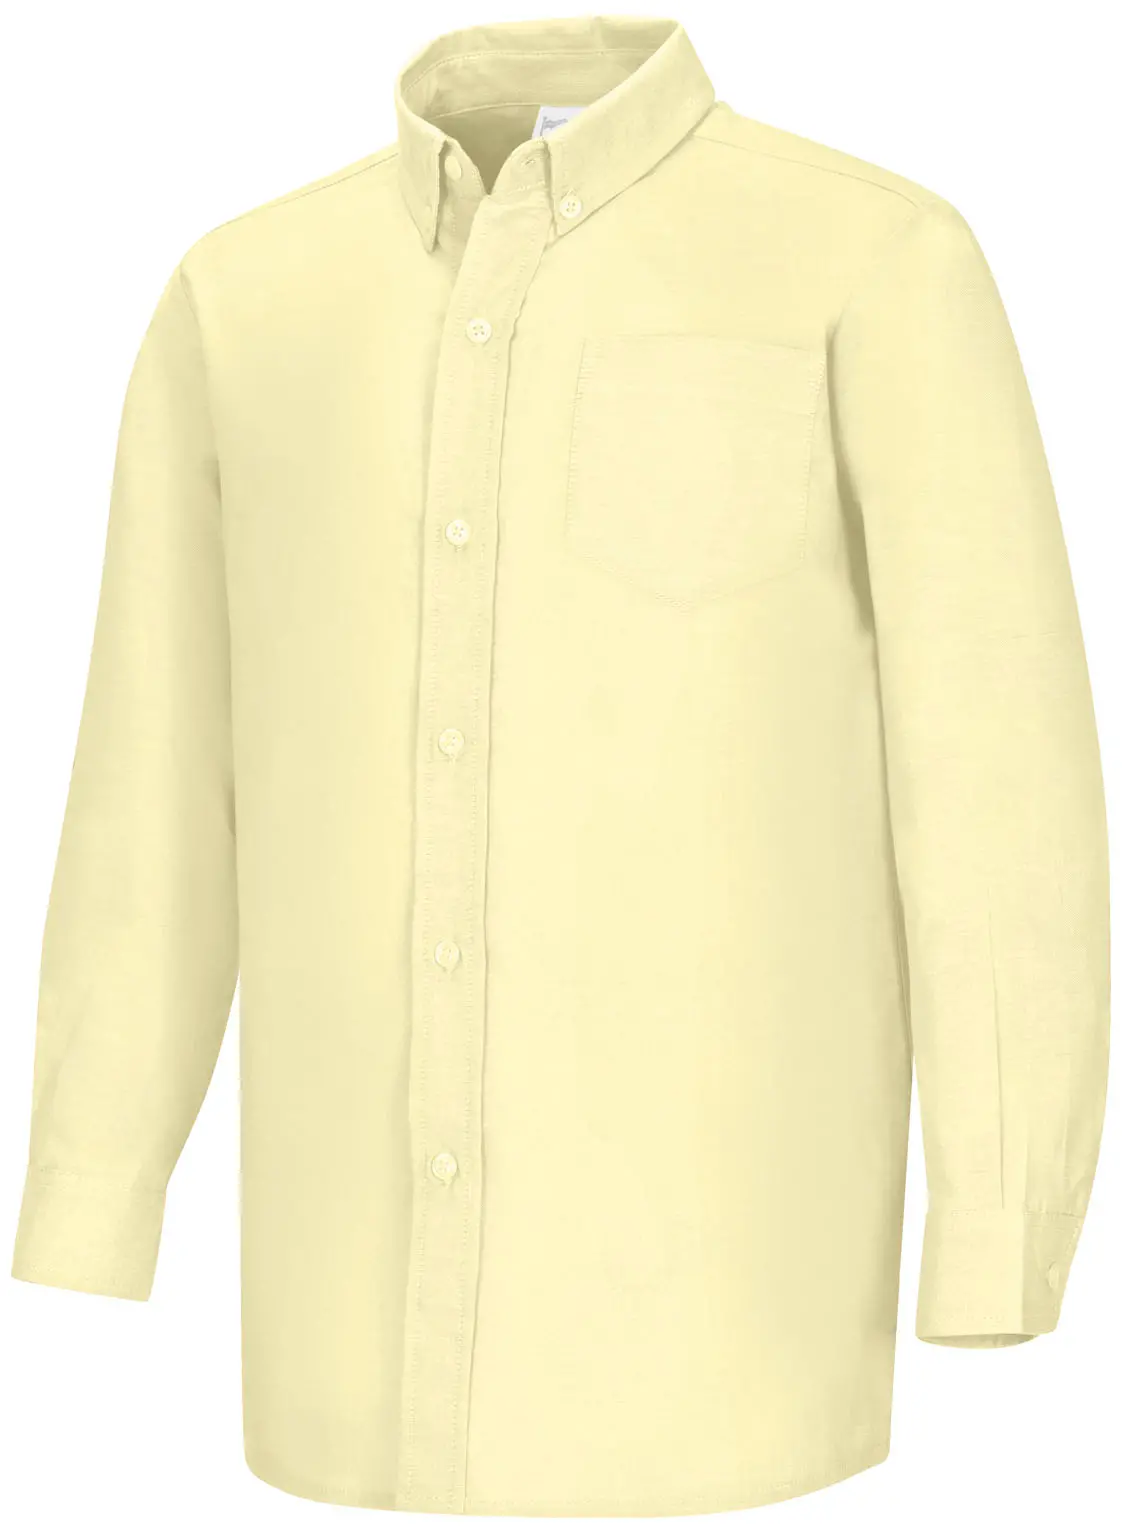 Boys Long Sleeve Oxford Shirt-Classroom Uniforms